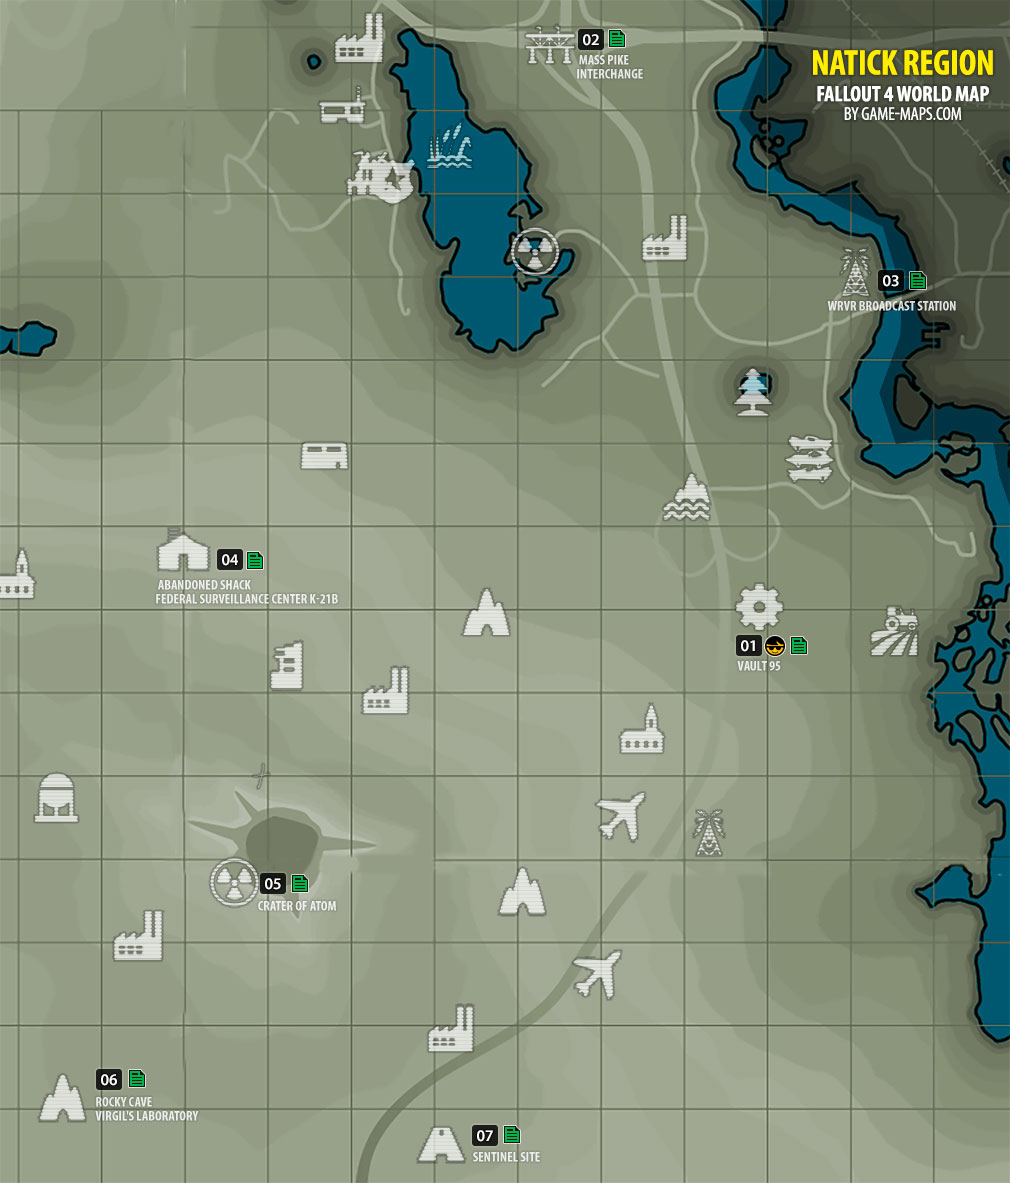 Natick Region Map Fallout 4